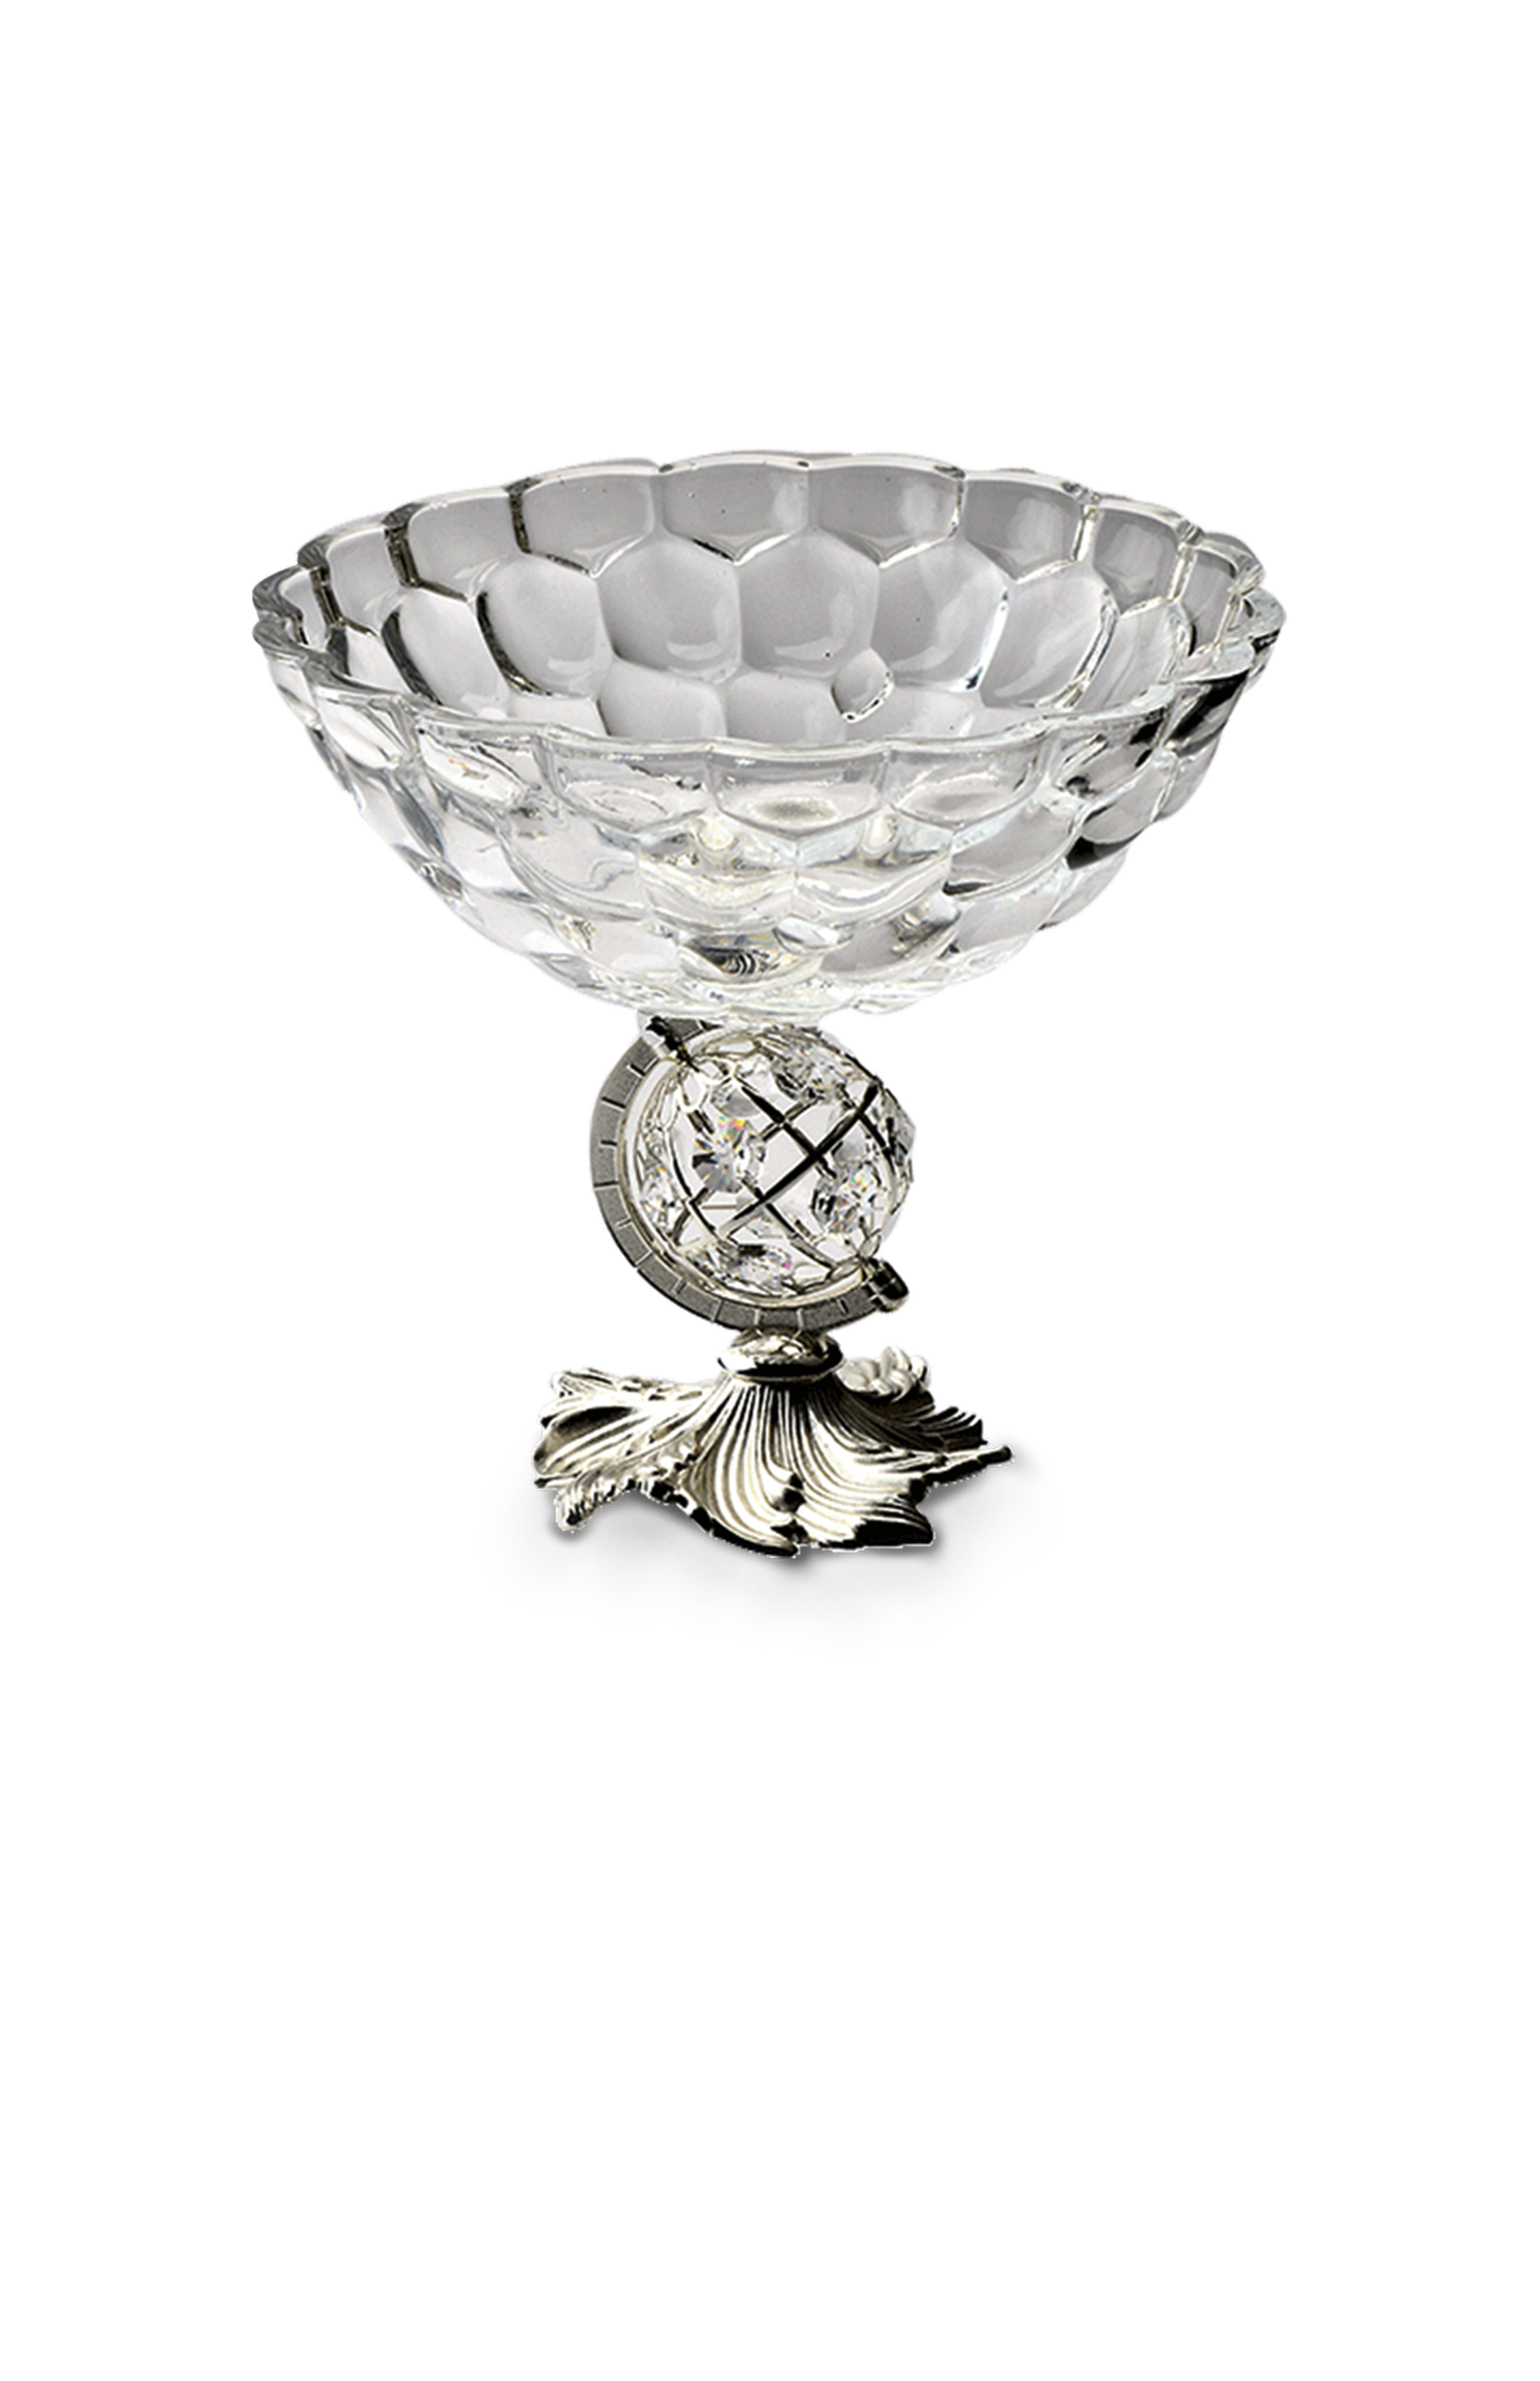 Crystal Bowl with rotating globe